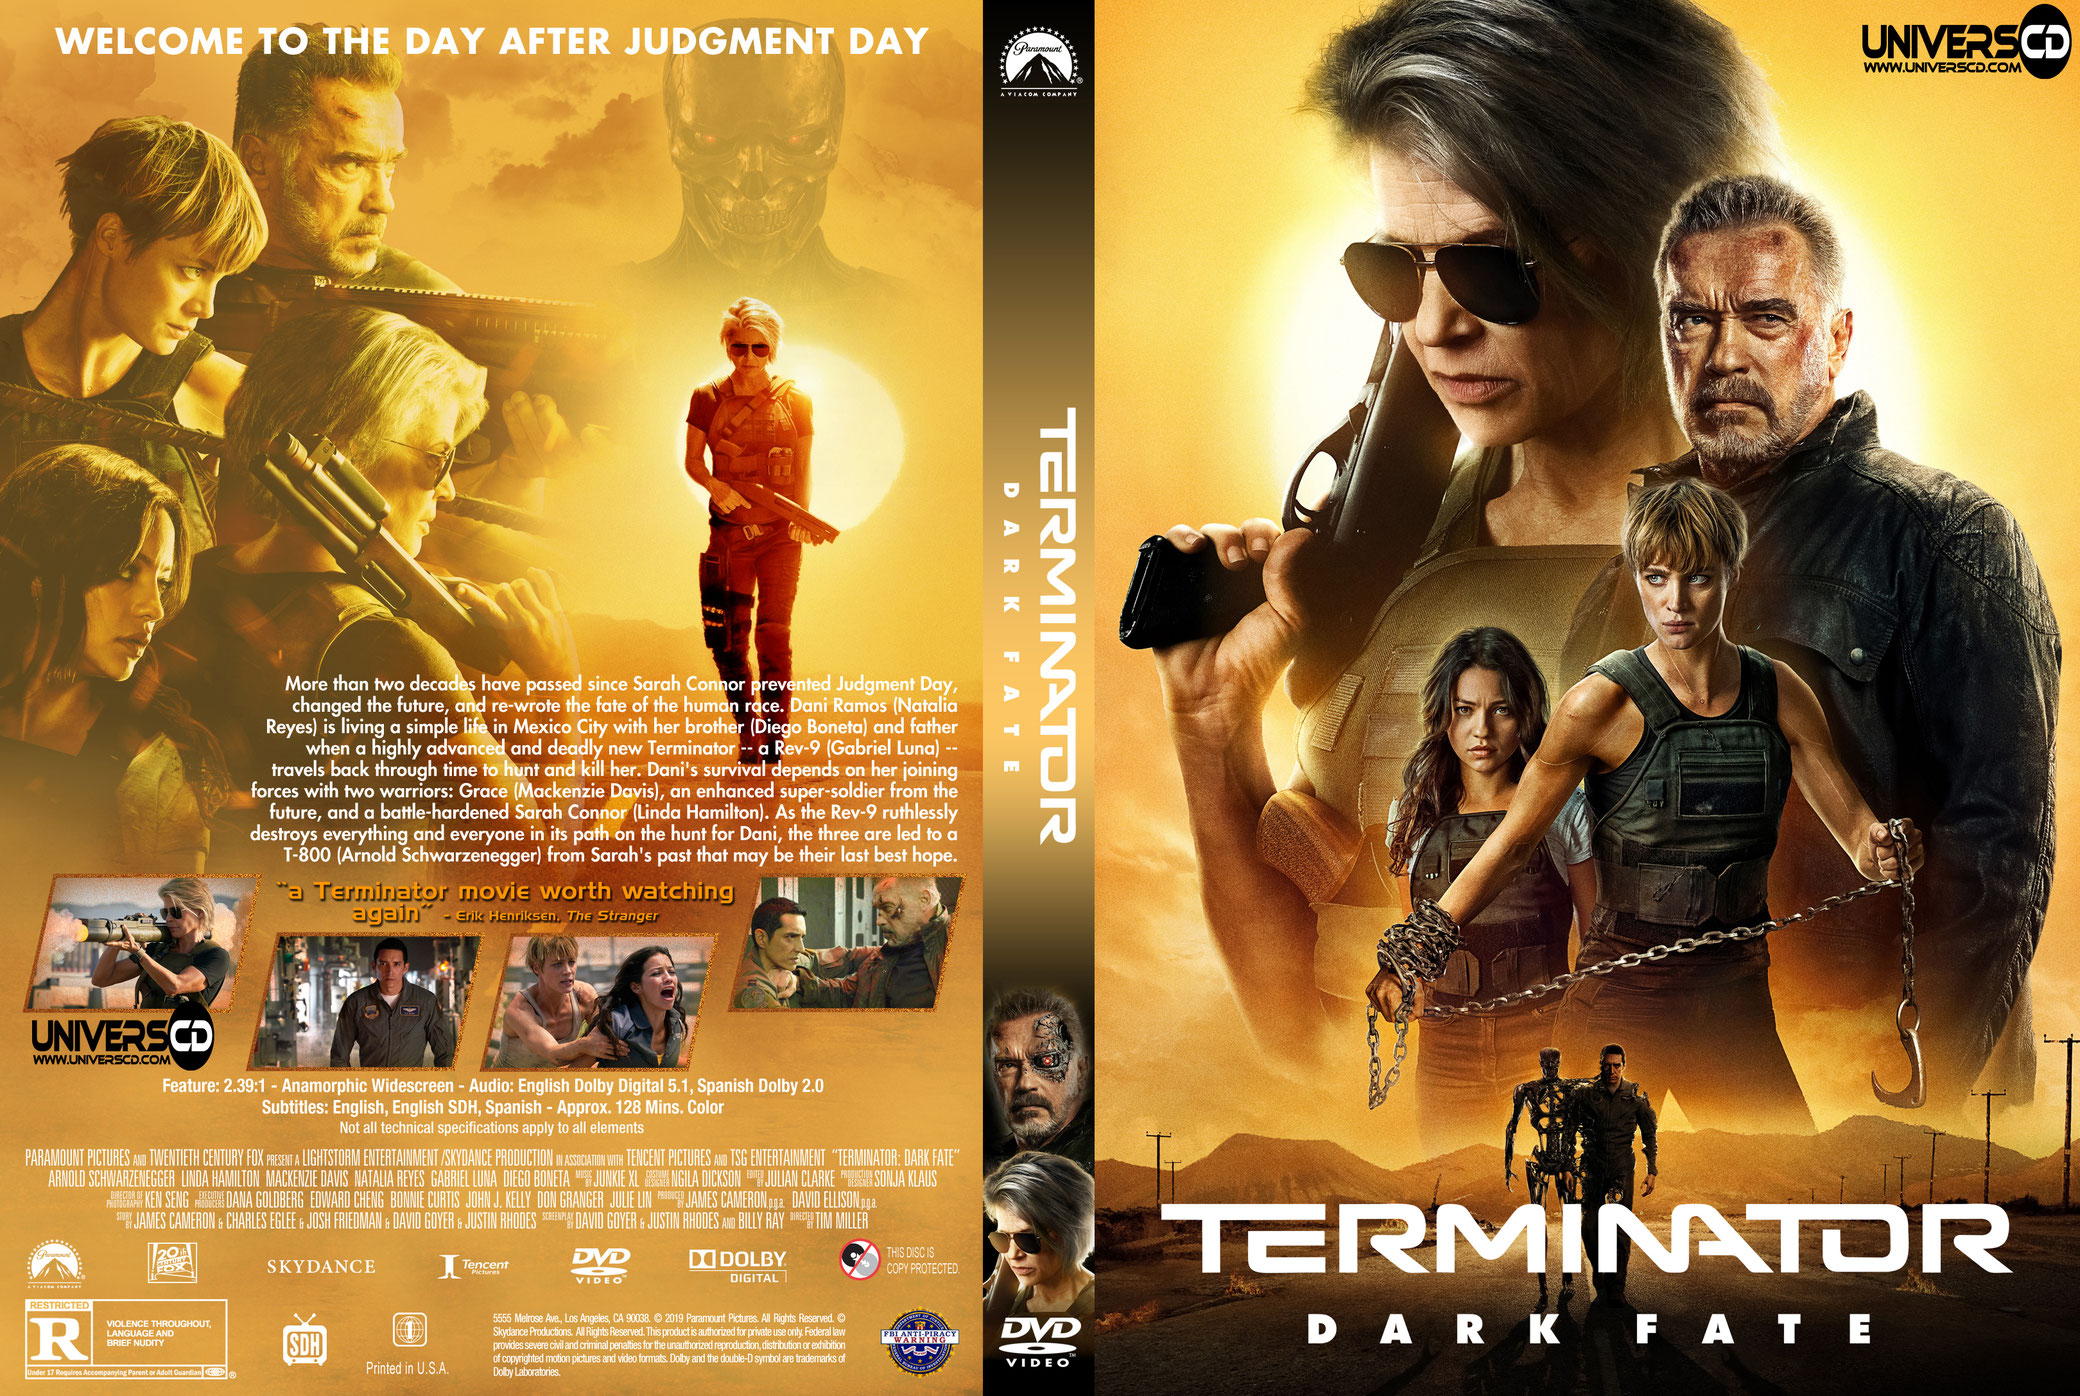 Terminator dark fate интеграторы. Терминатор темные судьбы Blu ray обложка. Terminator: Dark Fate DVD Cover. Терминатор тёмные судьбы. Terminator Dark Fate Blu ray Cover.